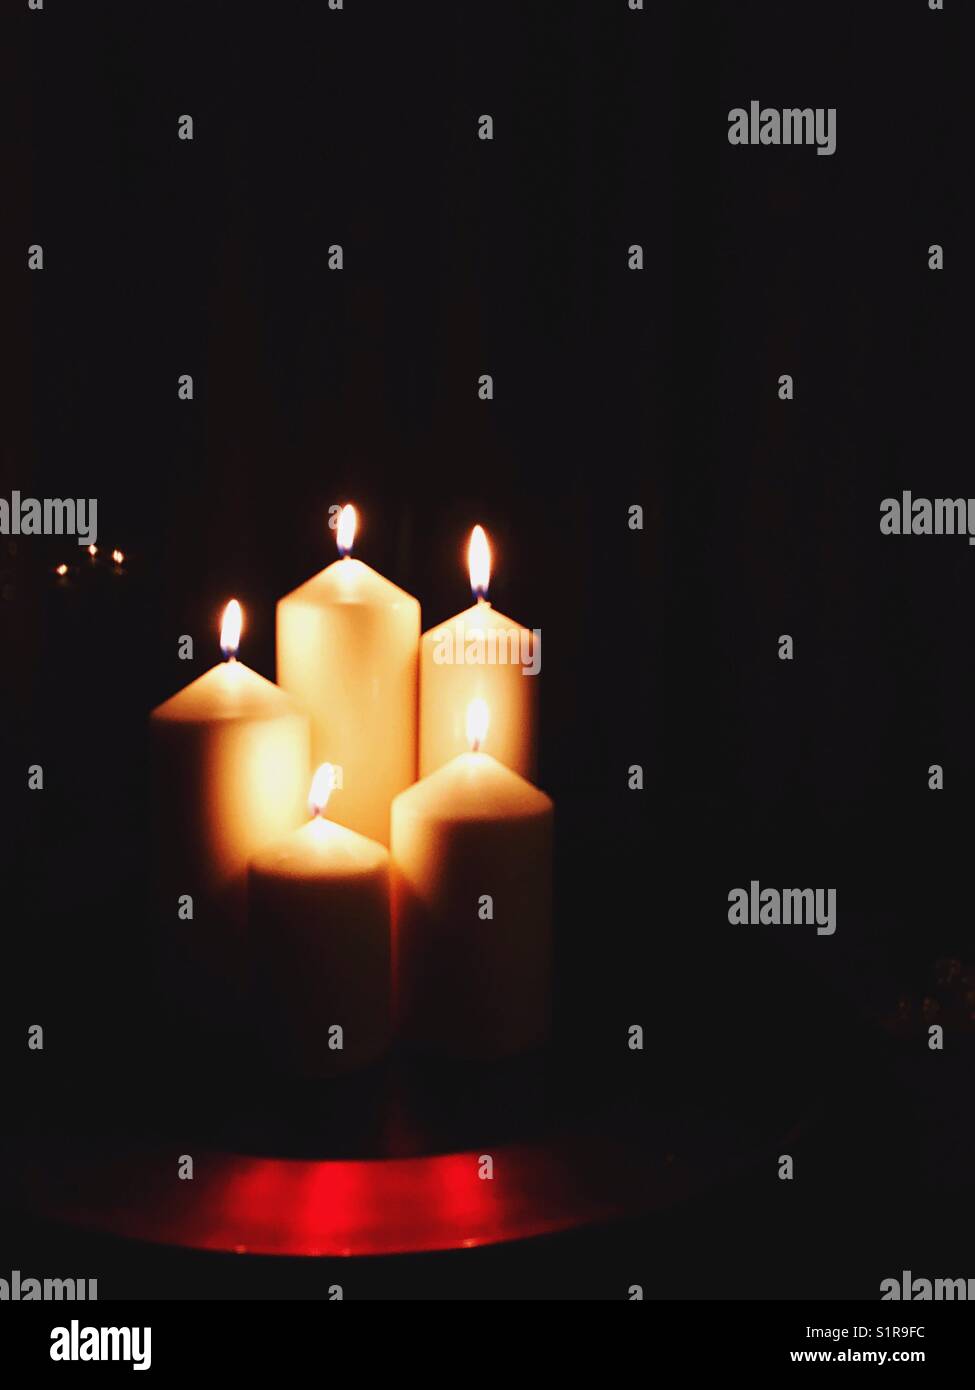 Cinco velas encendidas fotografías e imágenes de alta resolución - Alamy